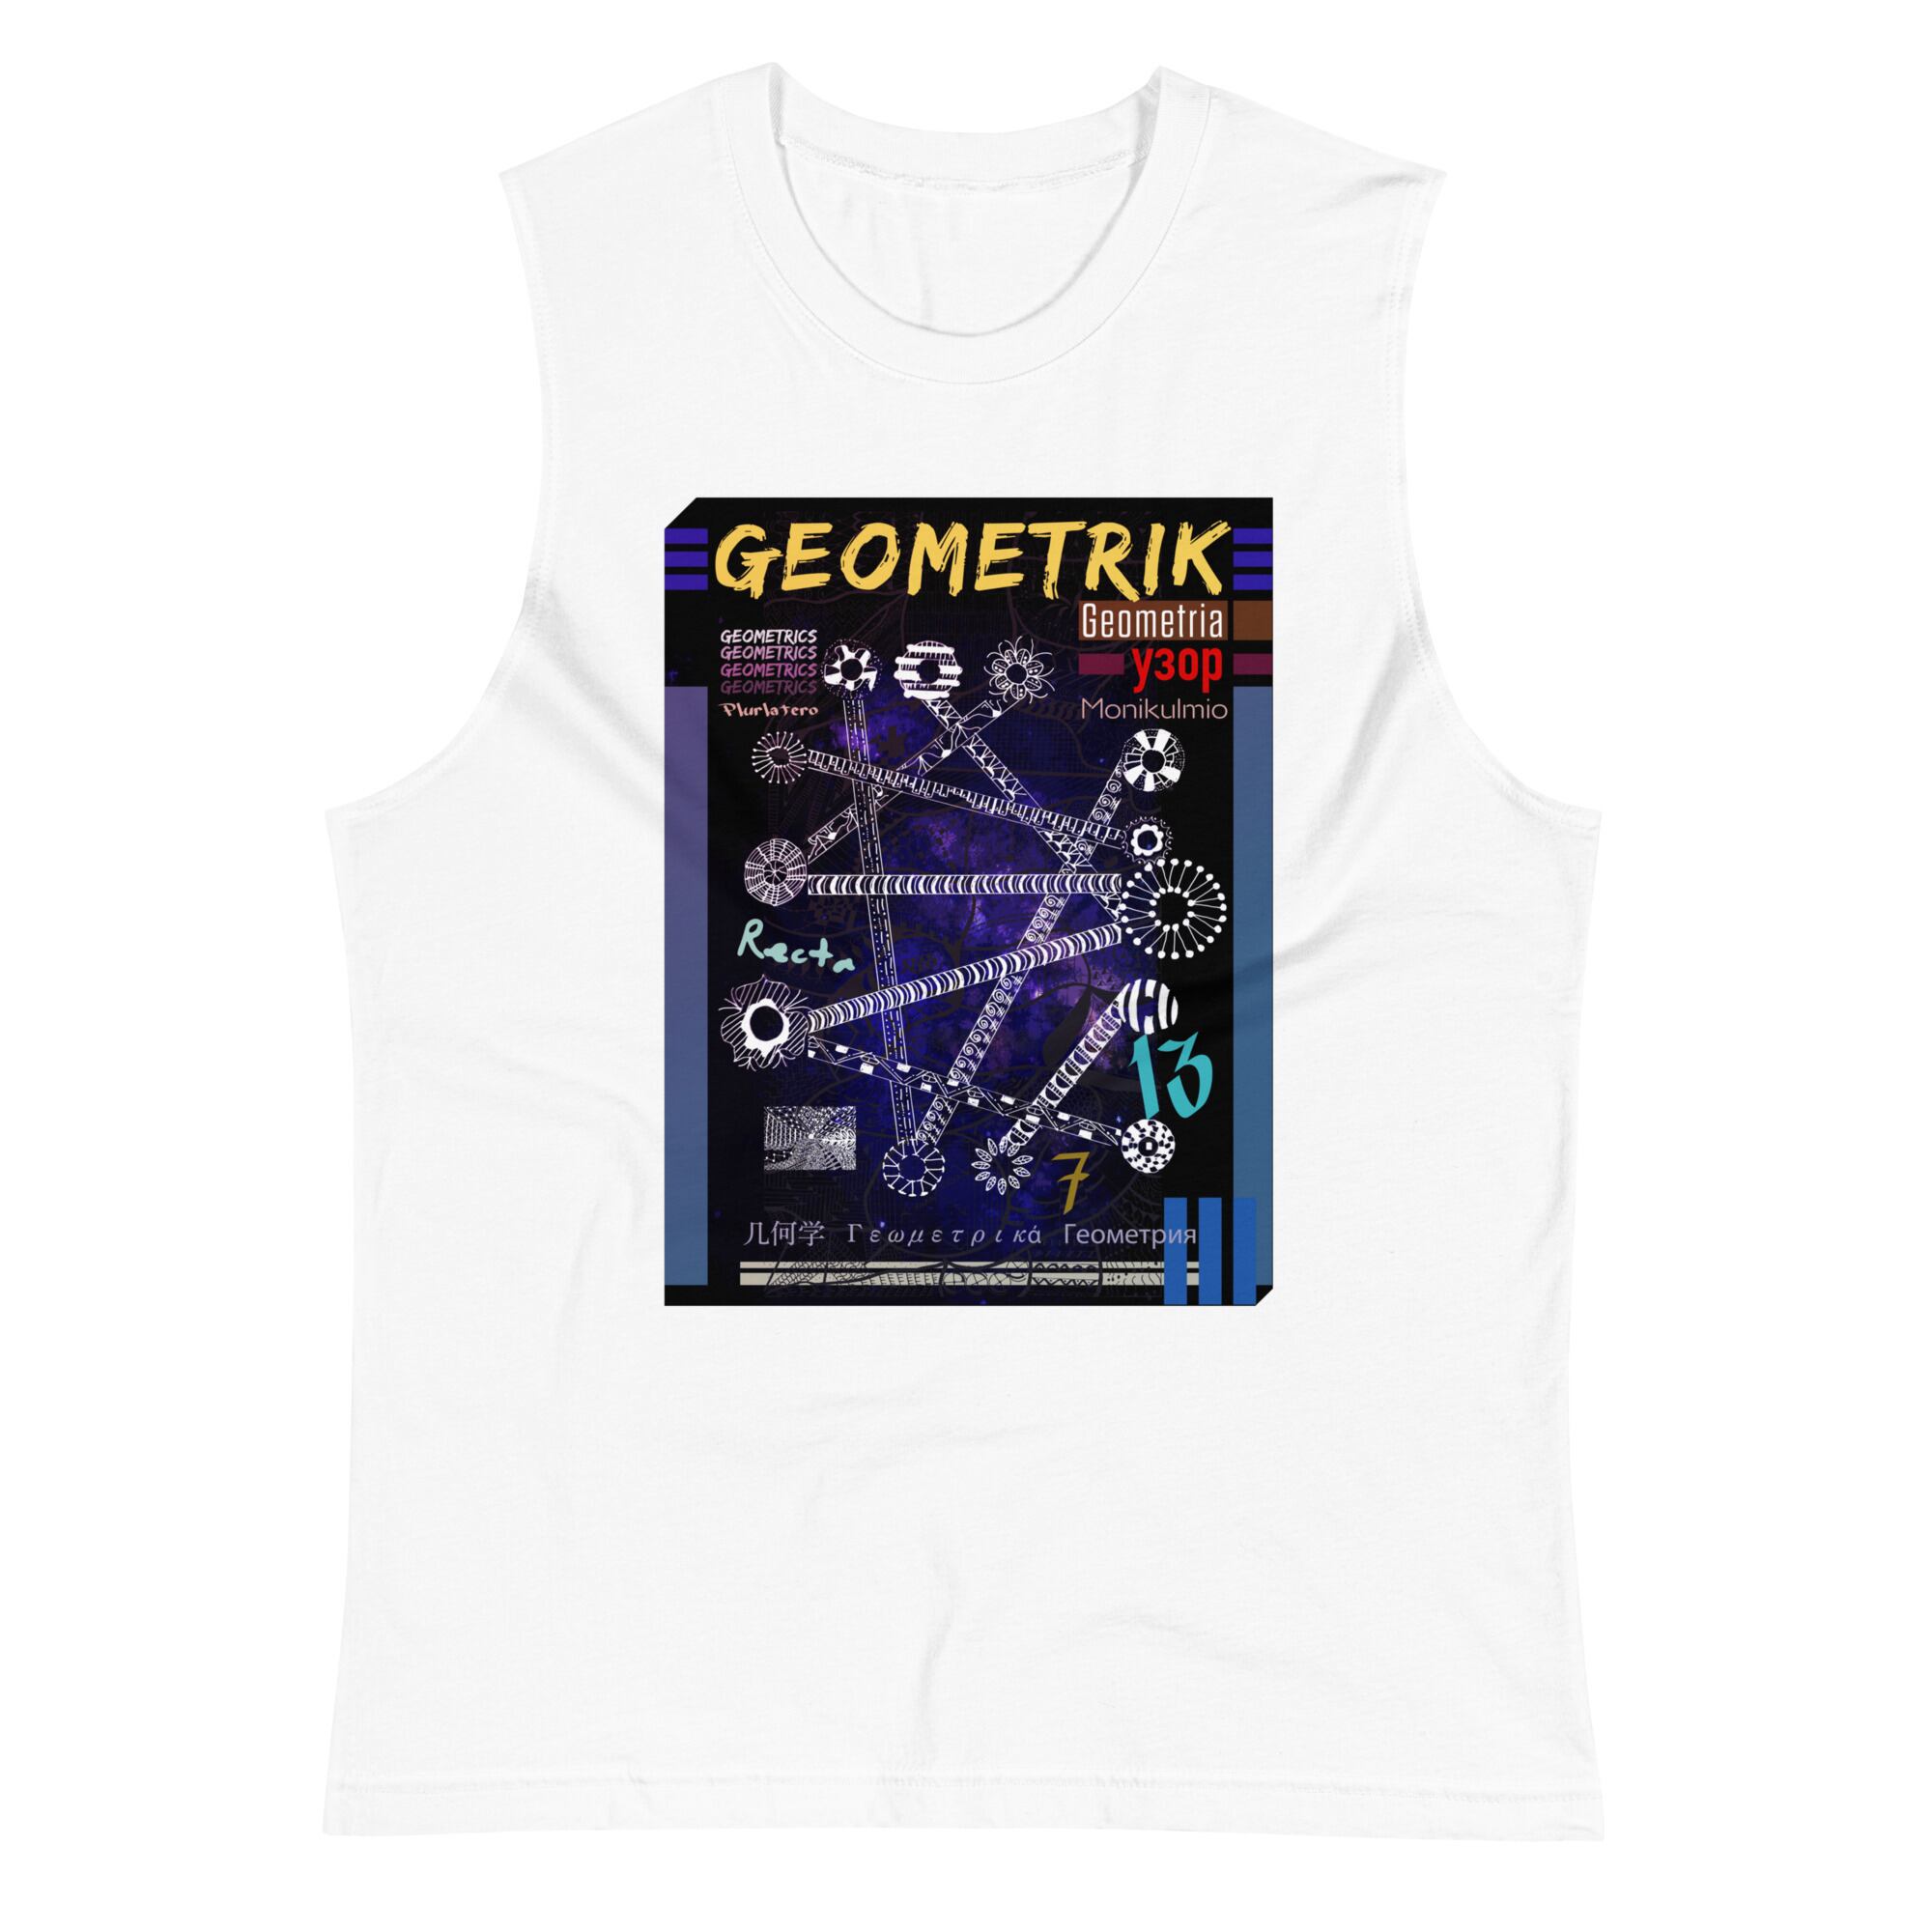 「Geometrics」のスウェット、Tシャツ、長袖Tシャツ、タンクトップを発売開始。